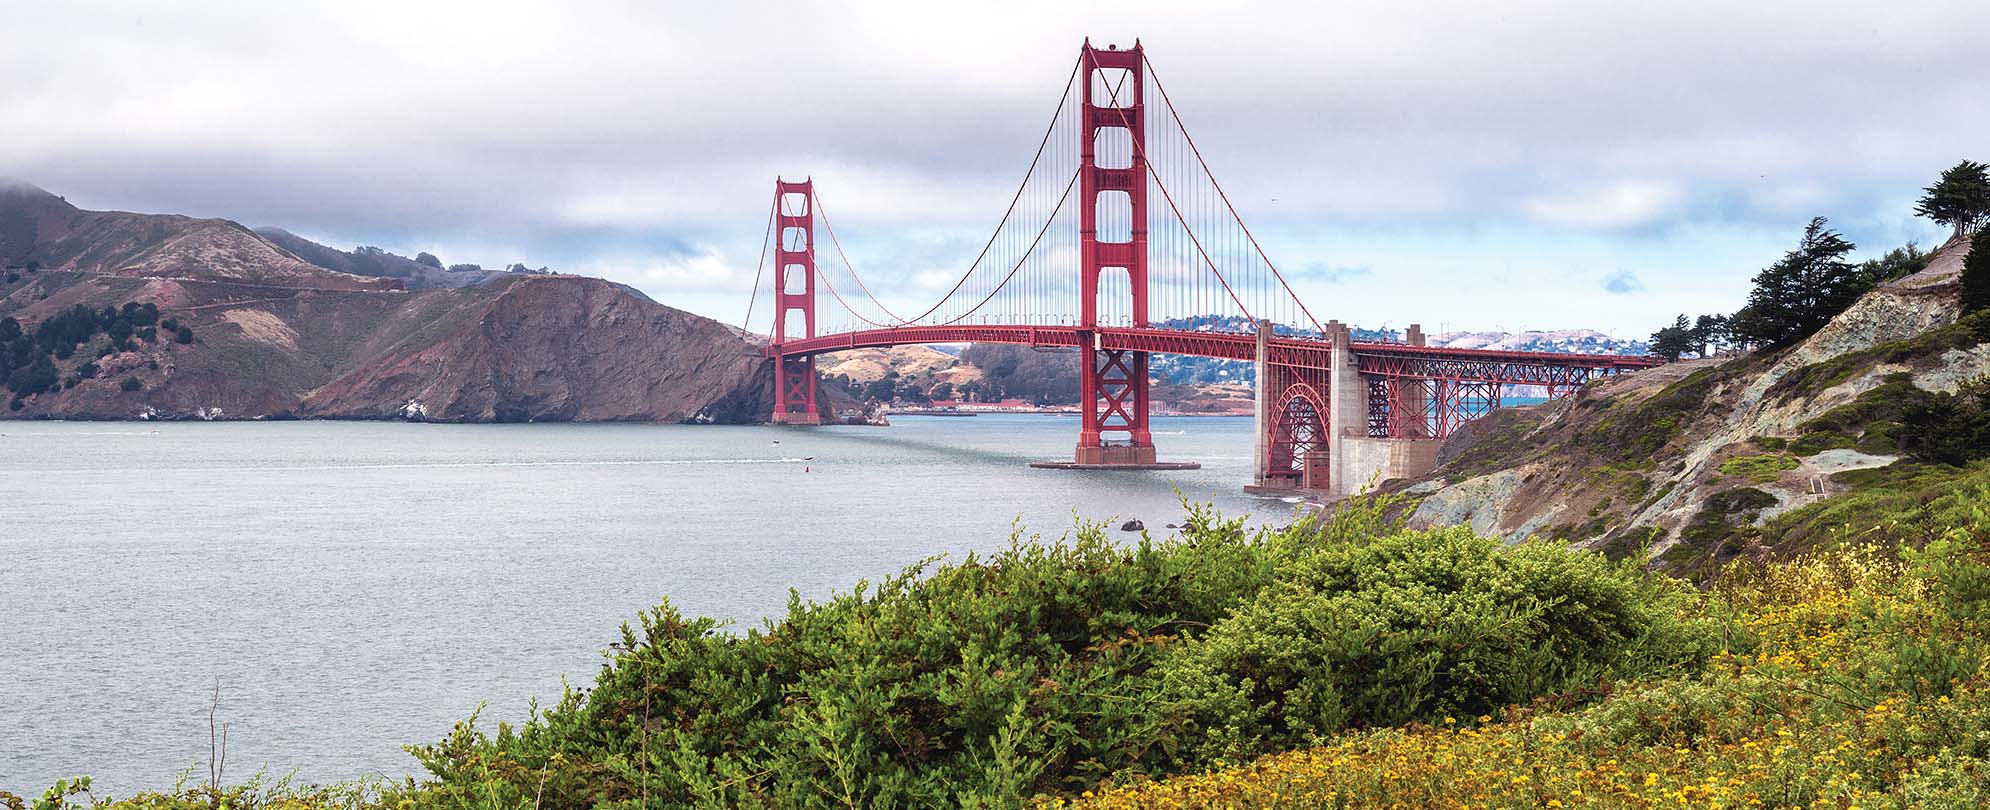 The Golden Gate Bridge in San Francisco, California.